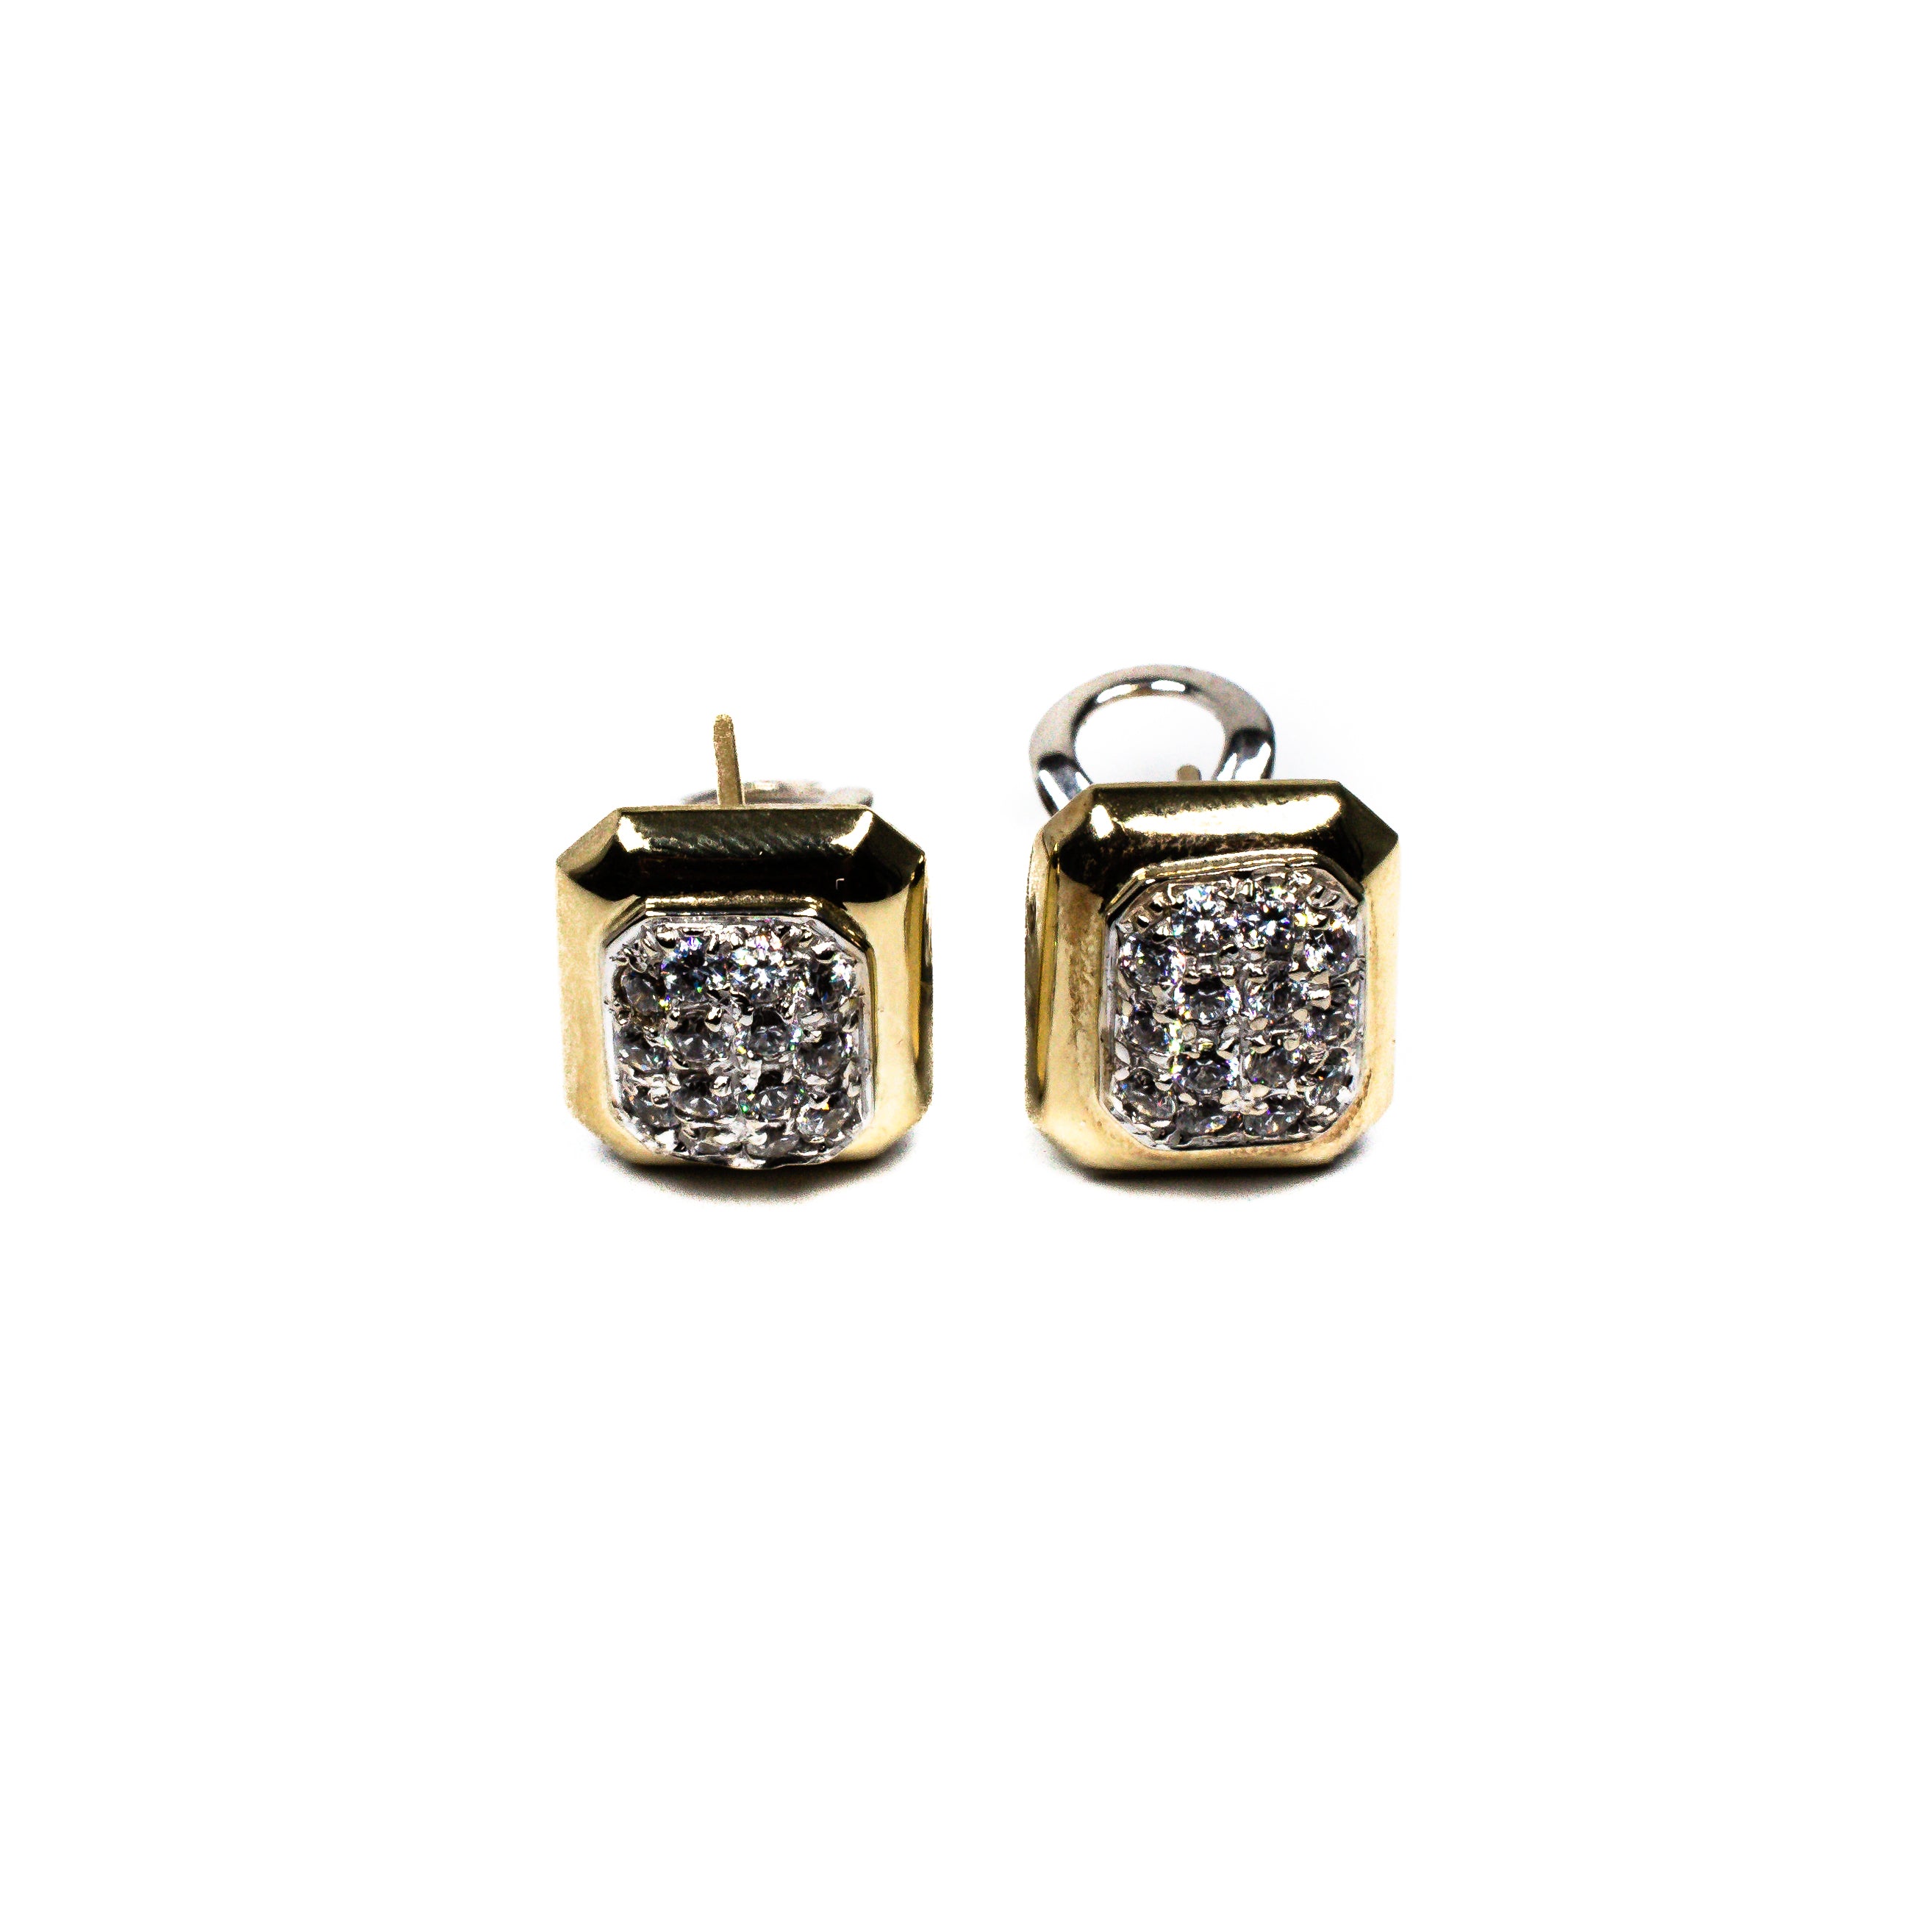 14kt Yellow Gold Diamond Earrings